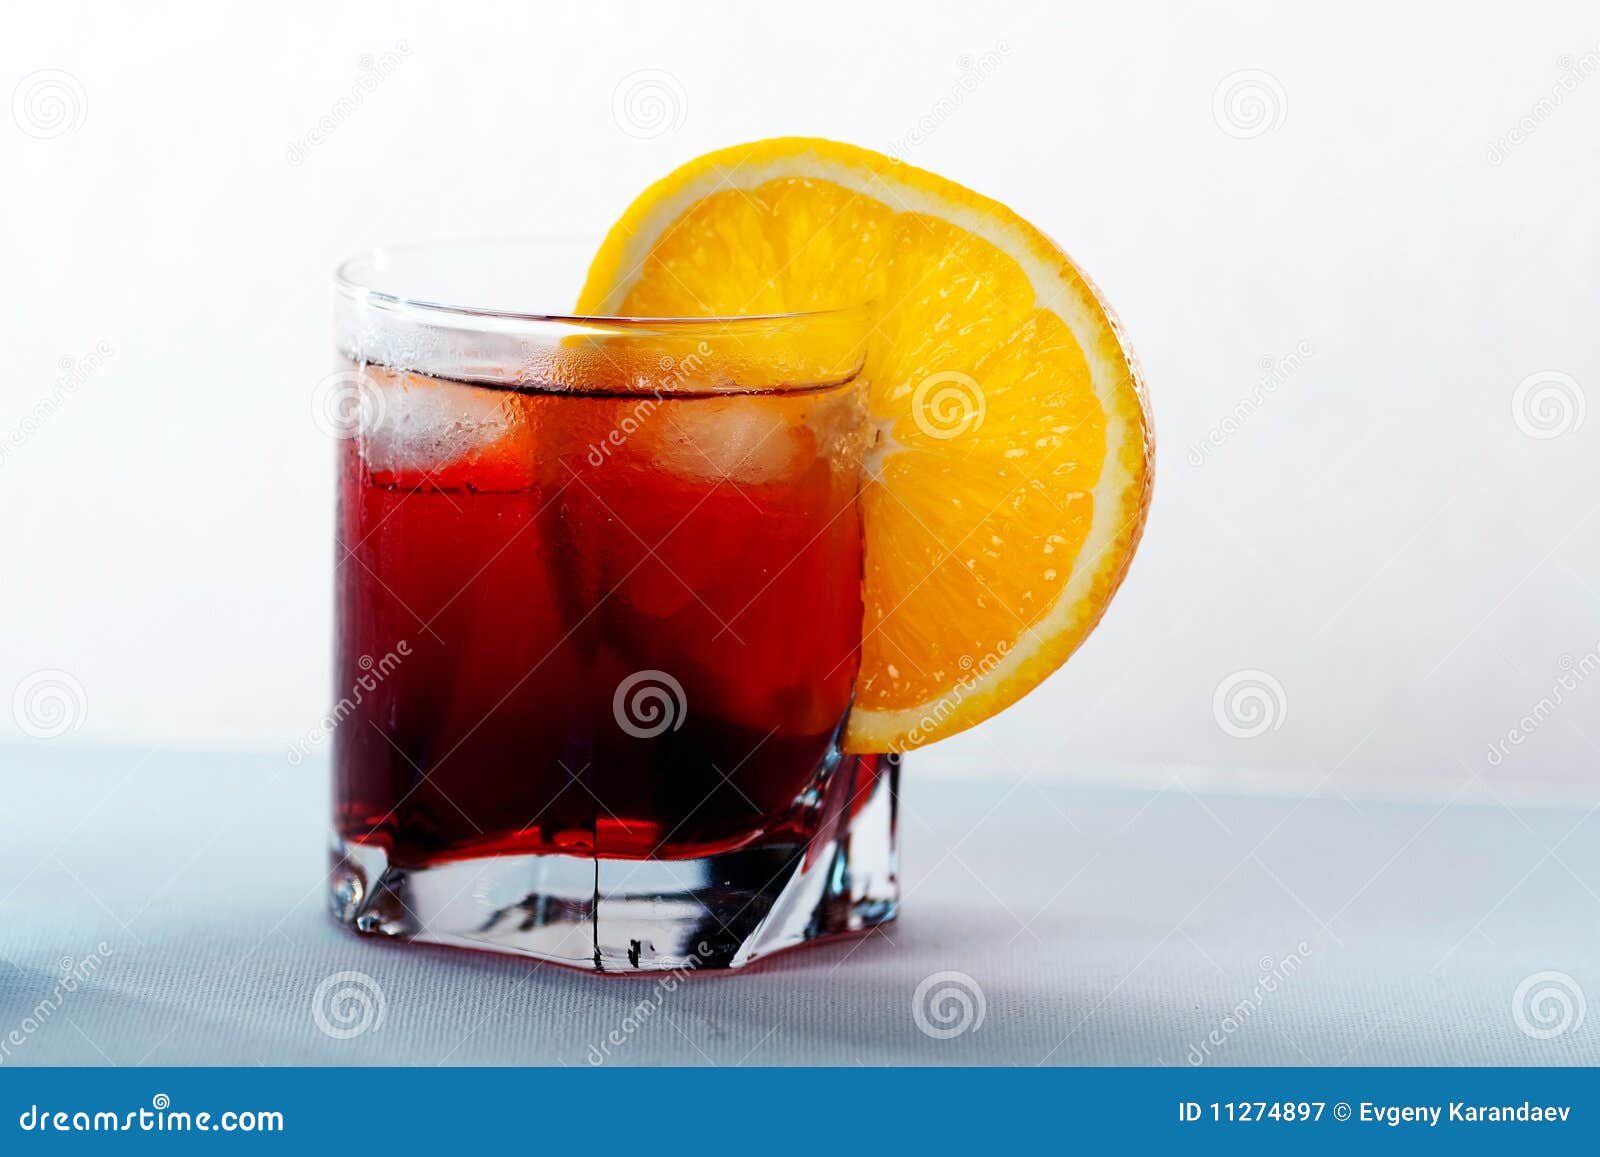 americano & negroni cocktail